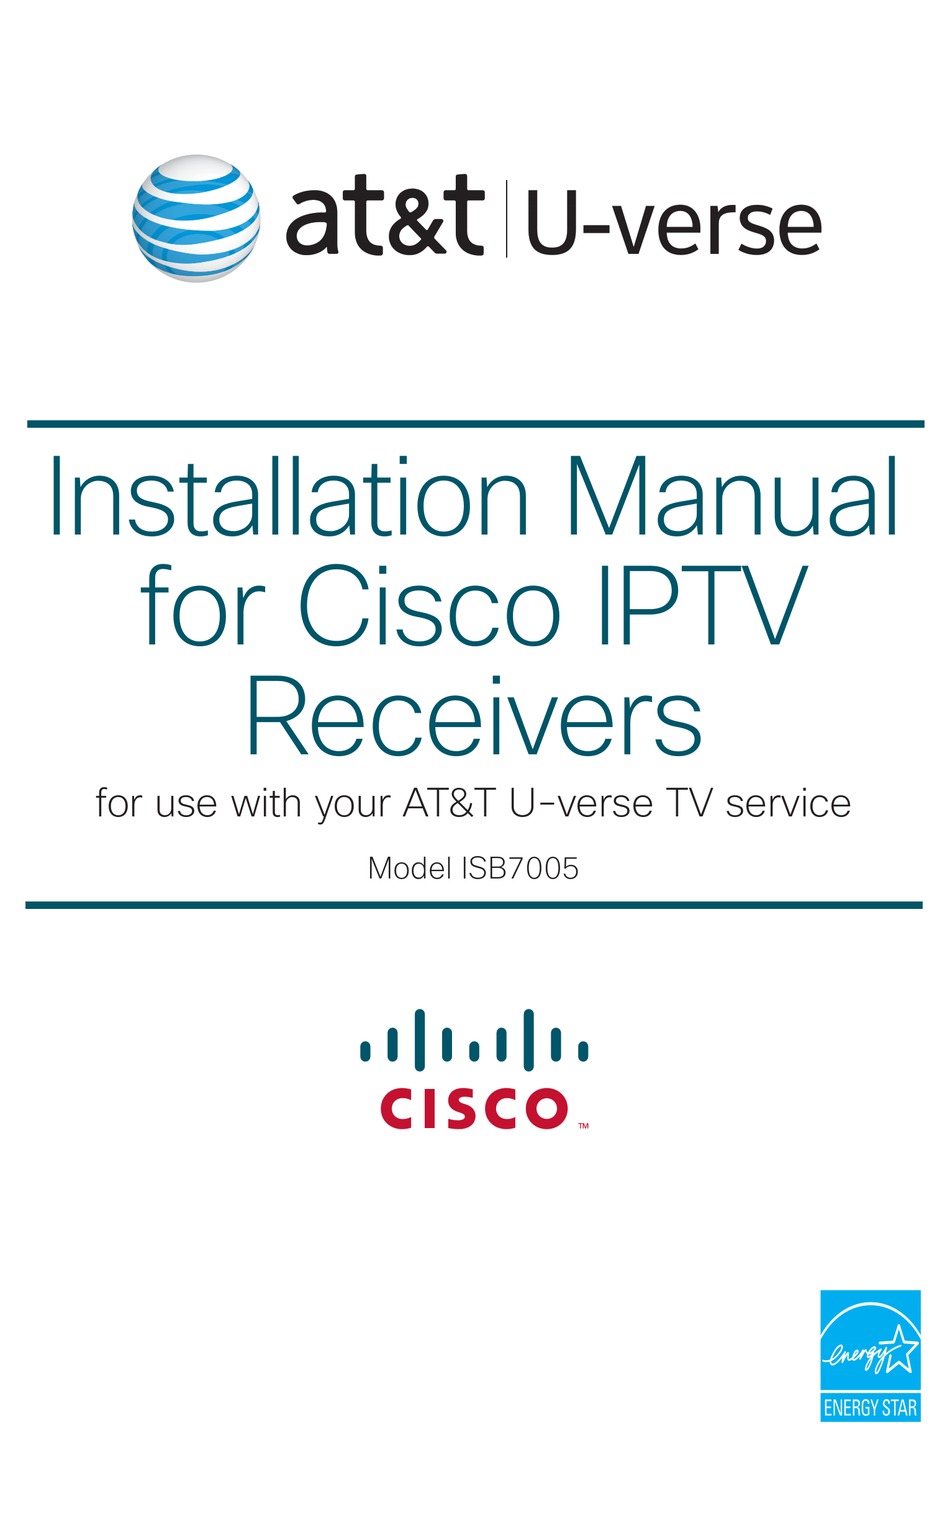 cisco-at-t-u-verse-isb7005-installation-manual-pdf-download-manualslib